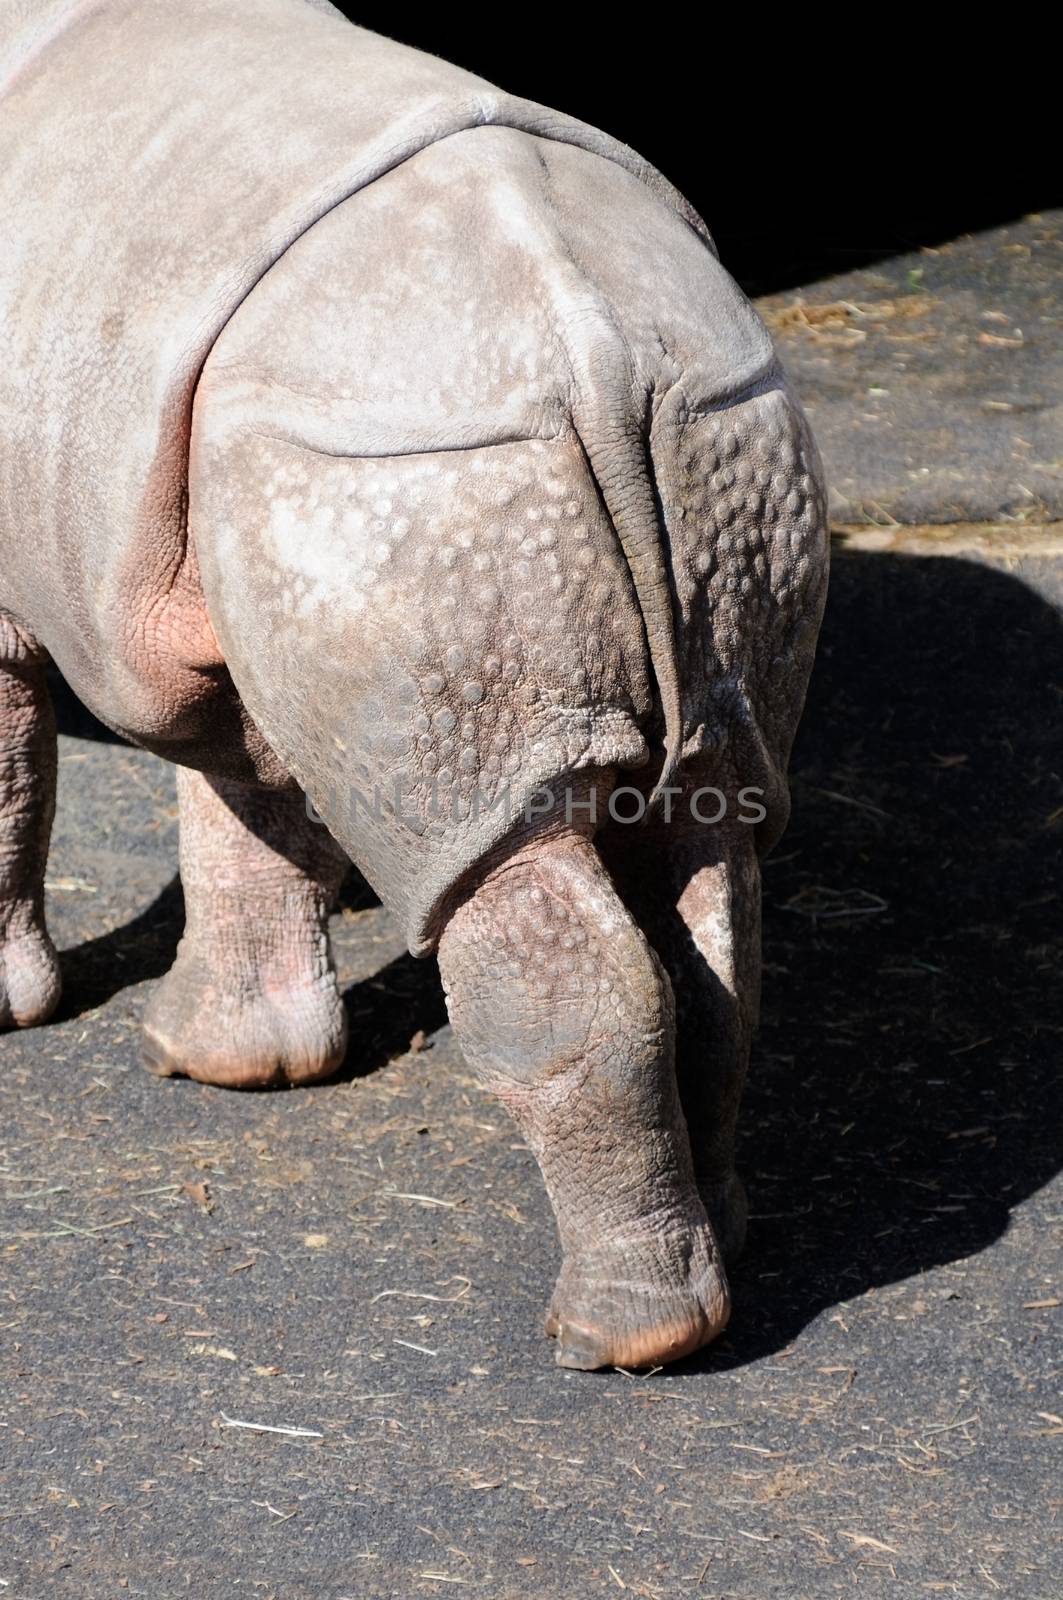 Rhino rear by kmwphotography